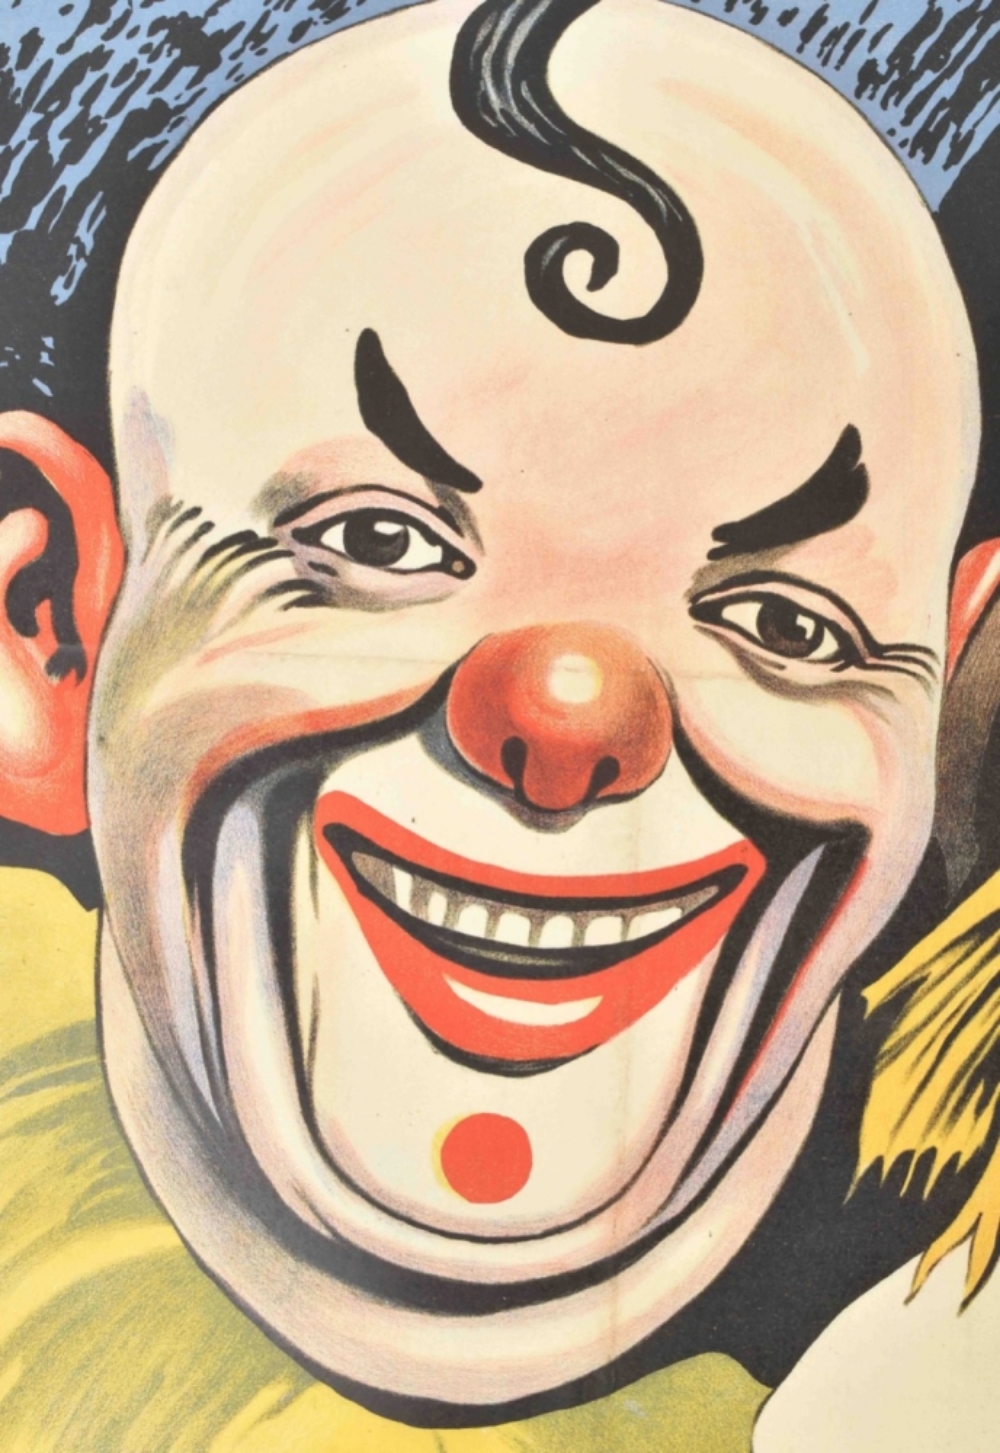 [Strassburger] "Portrait of three clowns" - Image 4 of 7